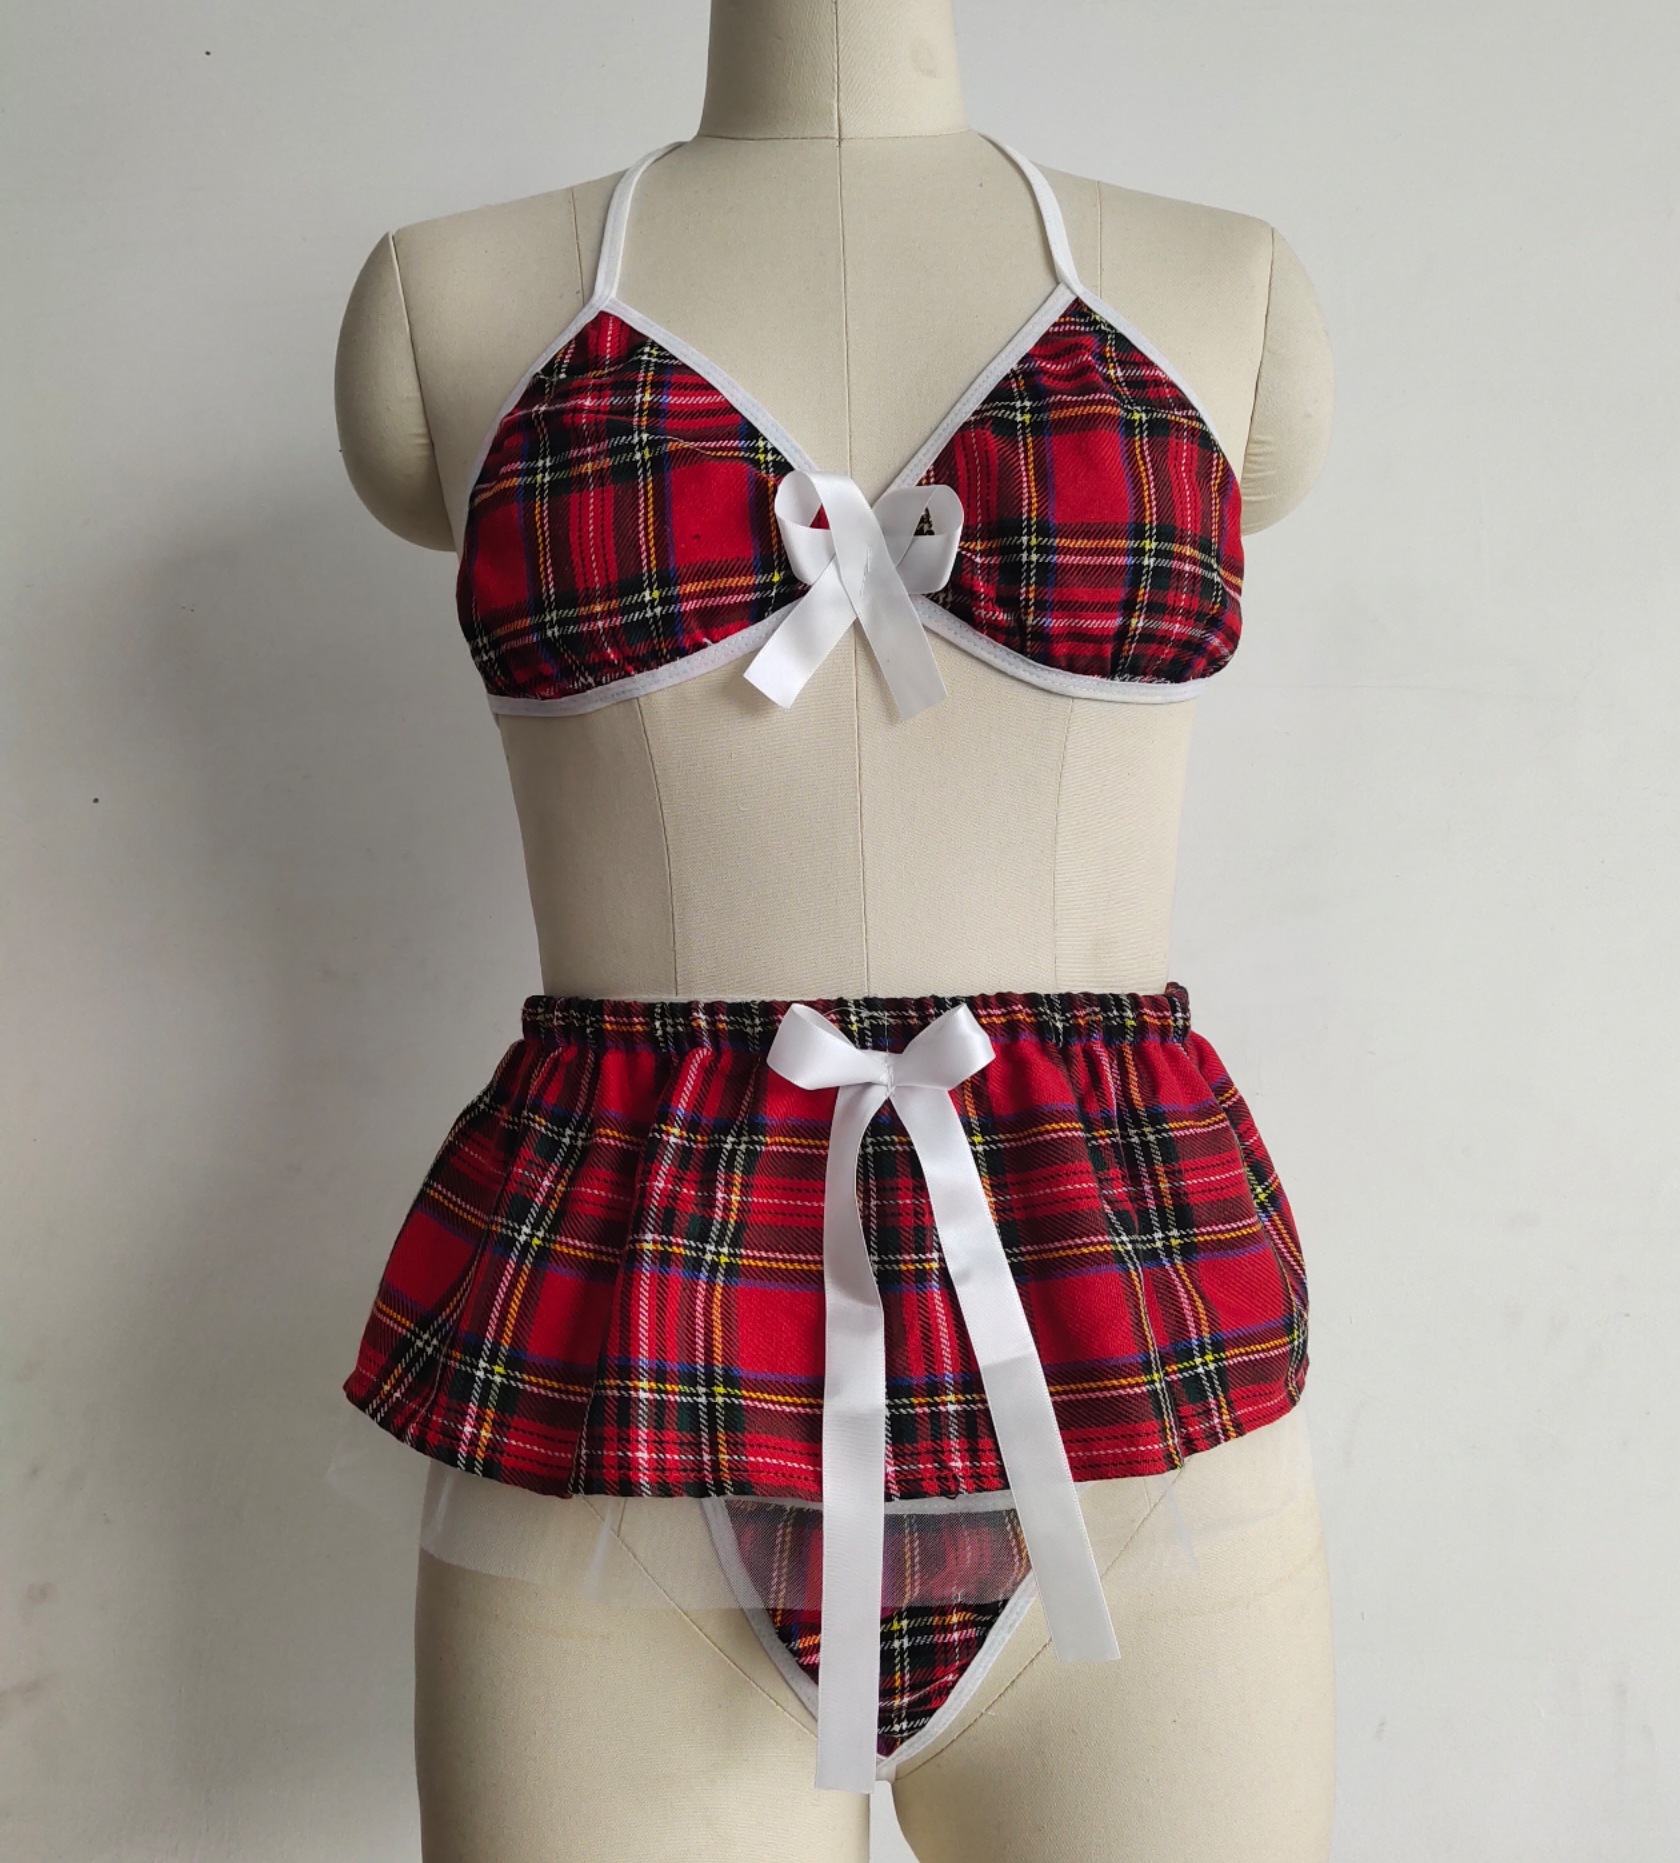 New Amazon Sexy Lingerie Underwear Sexy Seduction Tartan Skirt Passion Maid Costume Two-Piece Set Wholesale